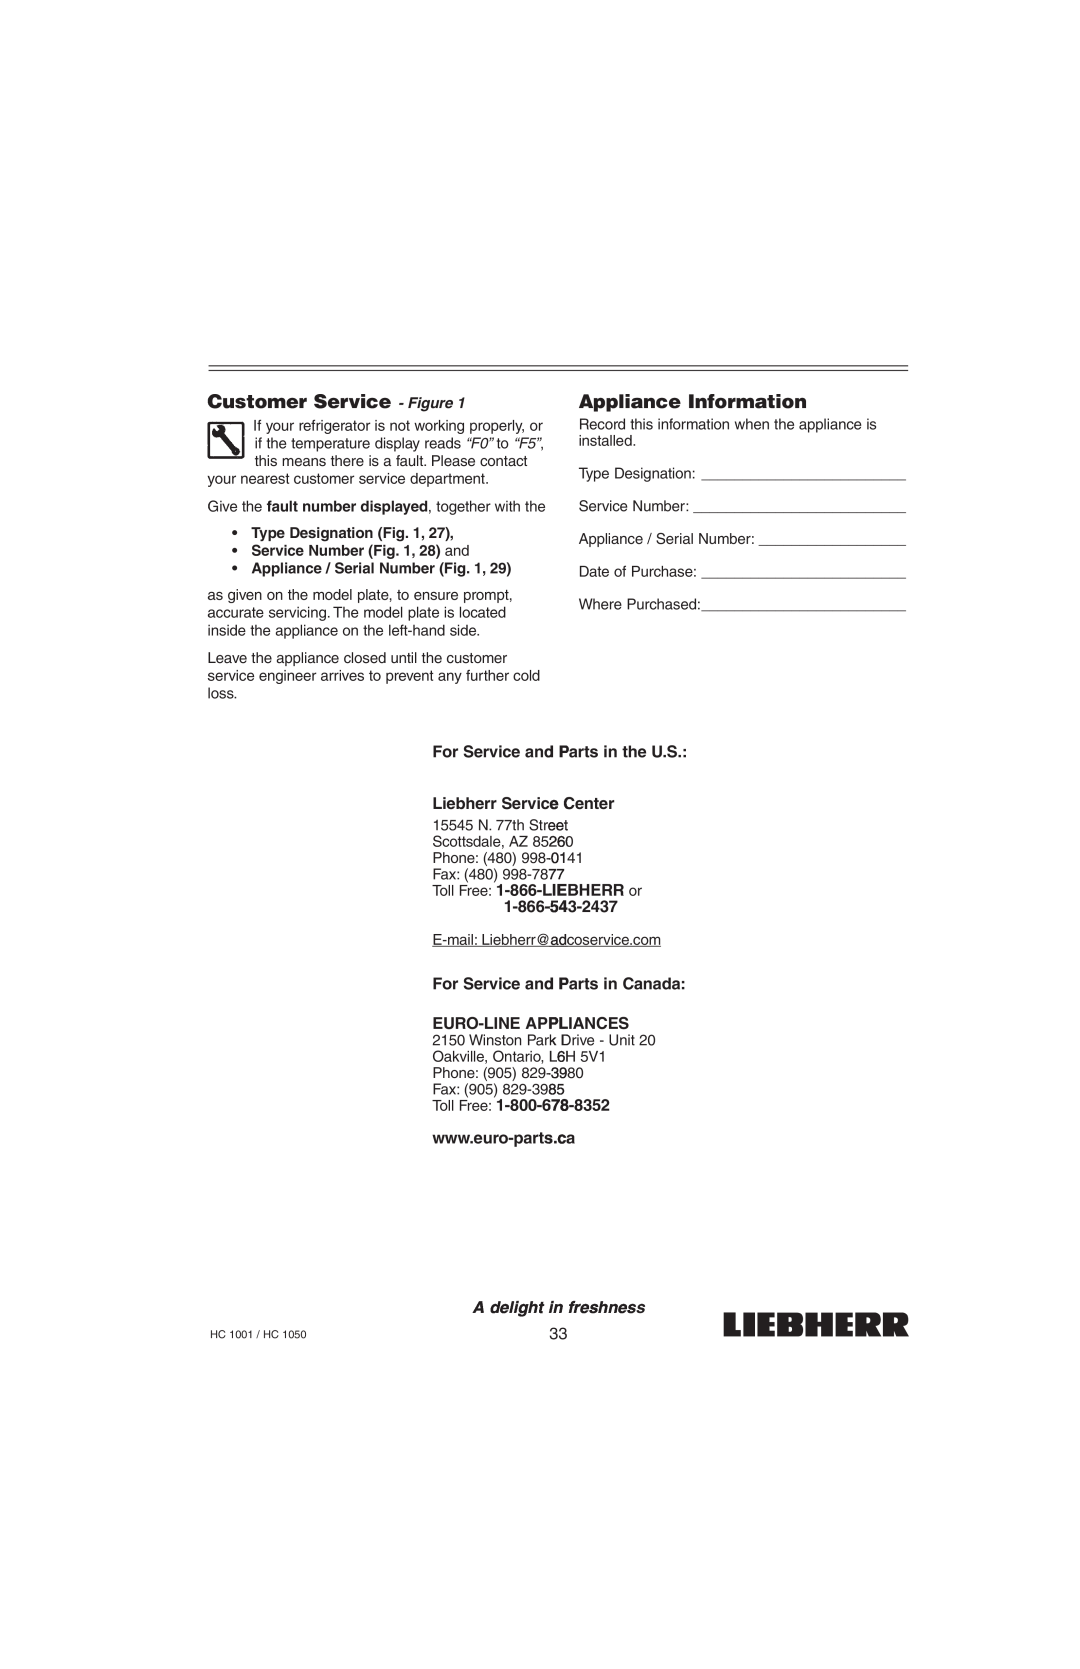 Liebherr HC1050 Customer Service - Figure, Appliance Information, For Service and Parts in the U.S Liebherr Service Center 